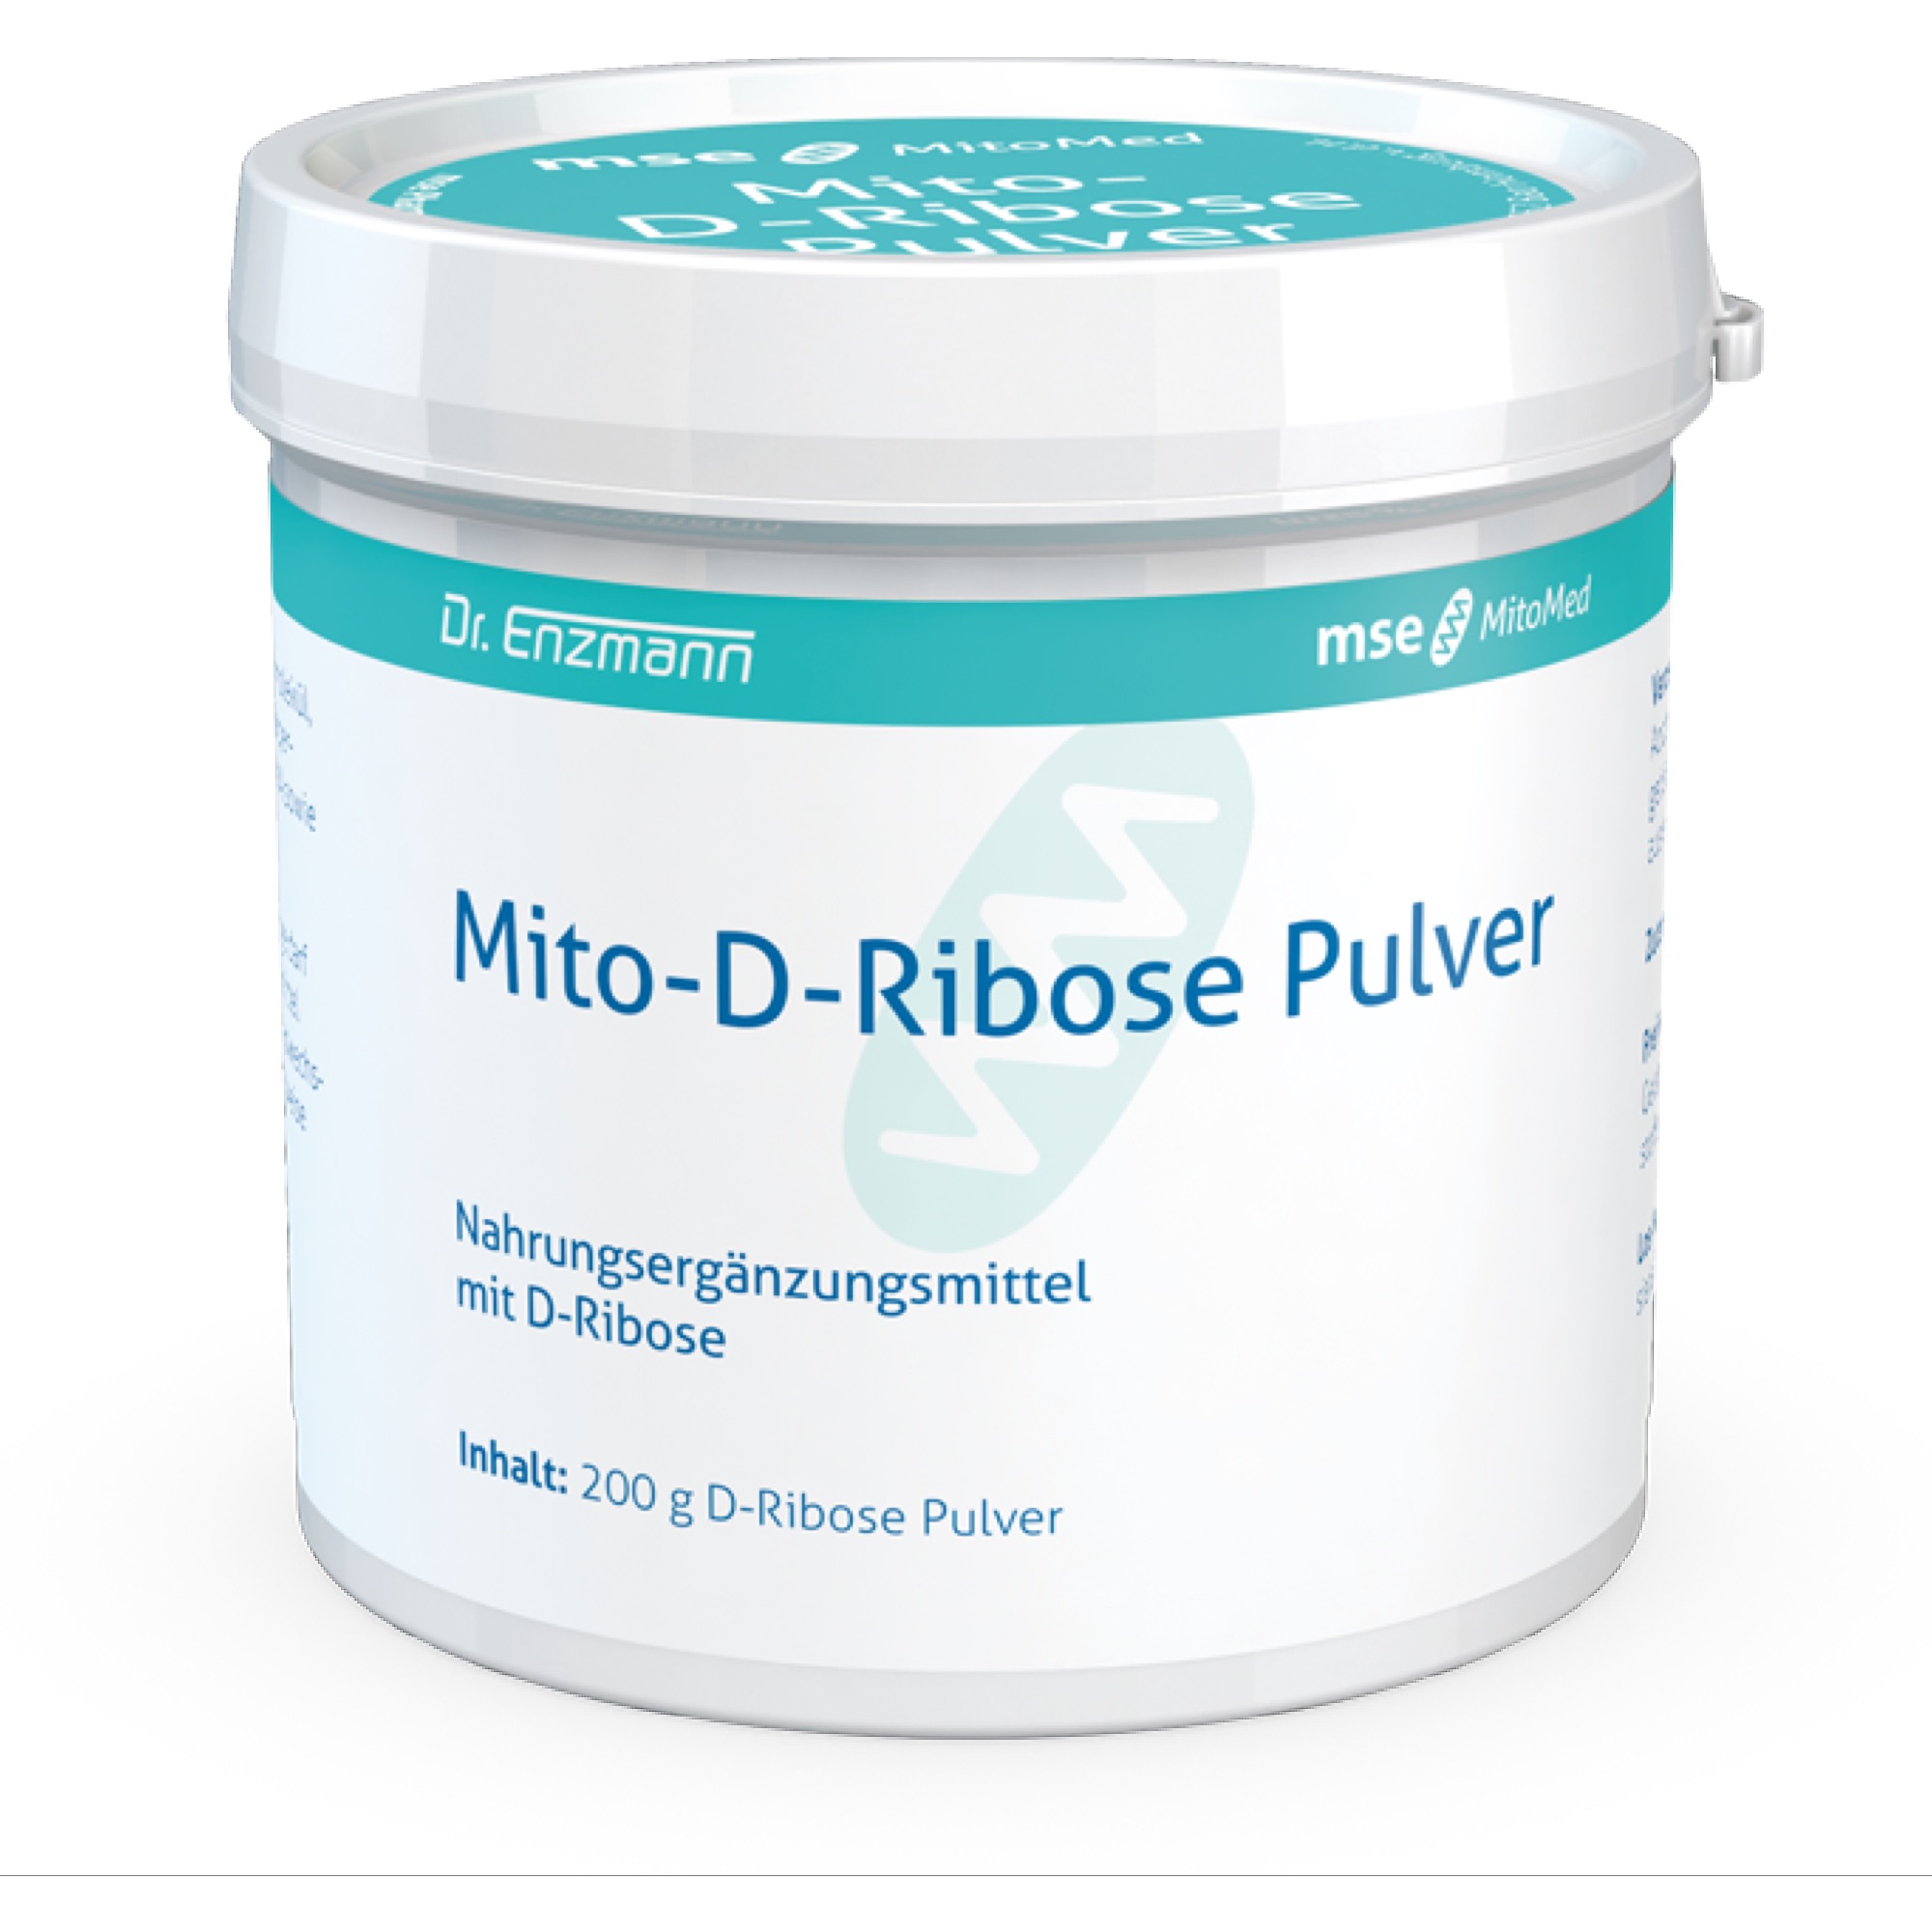 Mito-D-Ribose Pulver